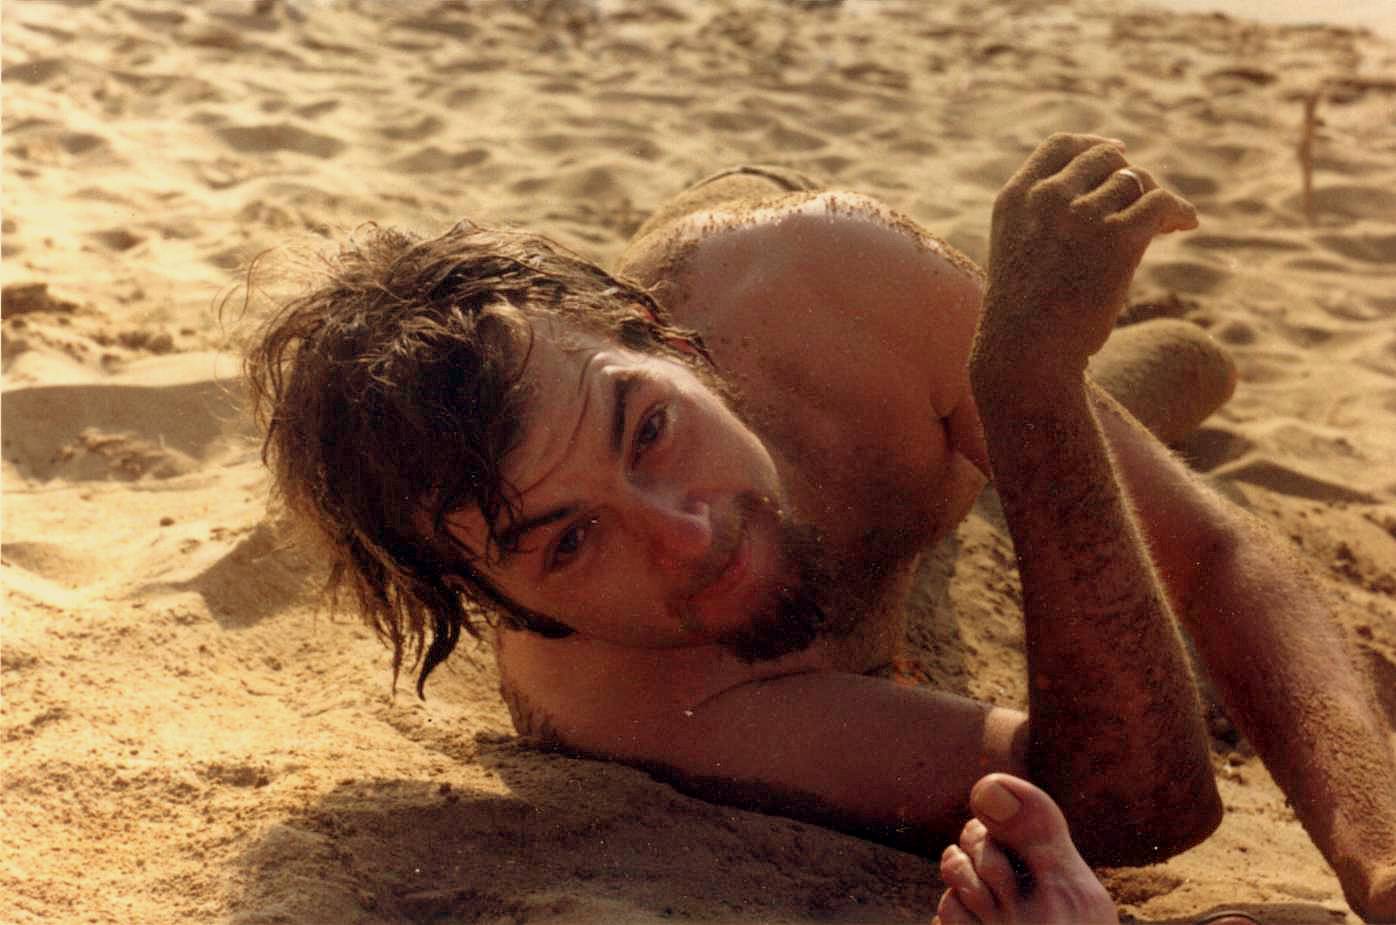 [David+on+a+Malta+beach+1972.jpg]